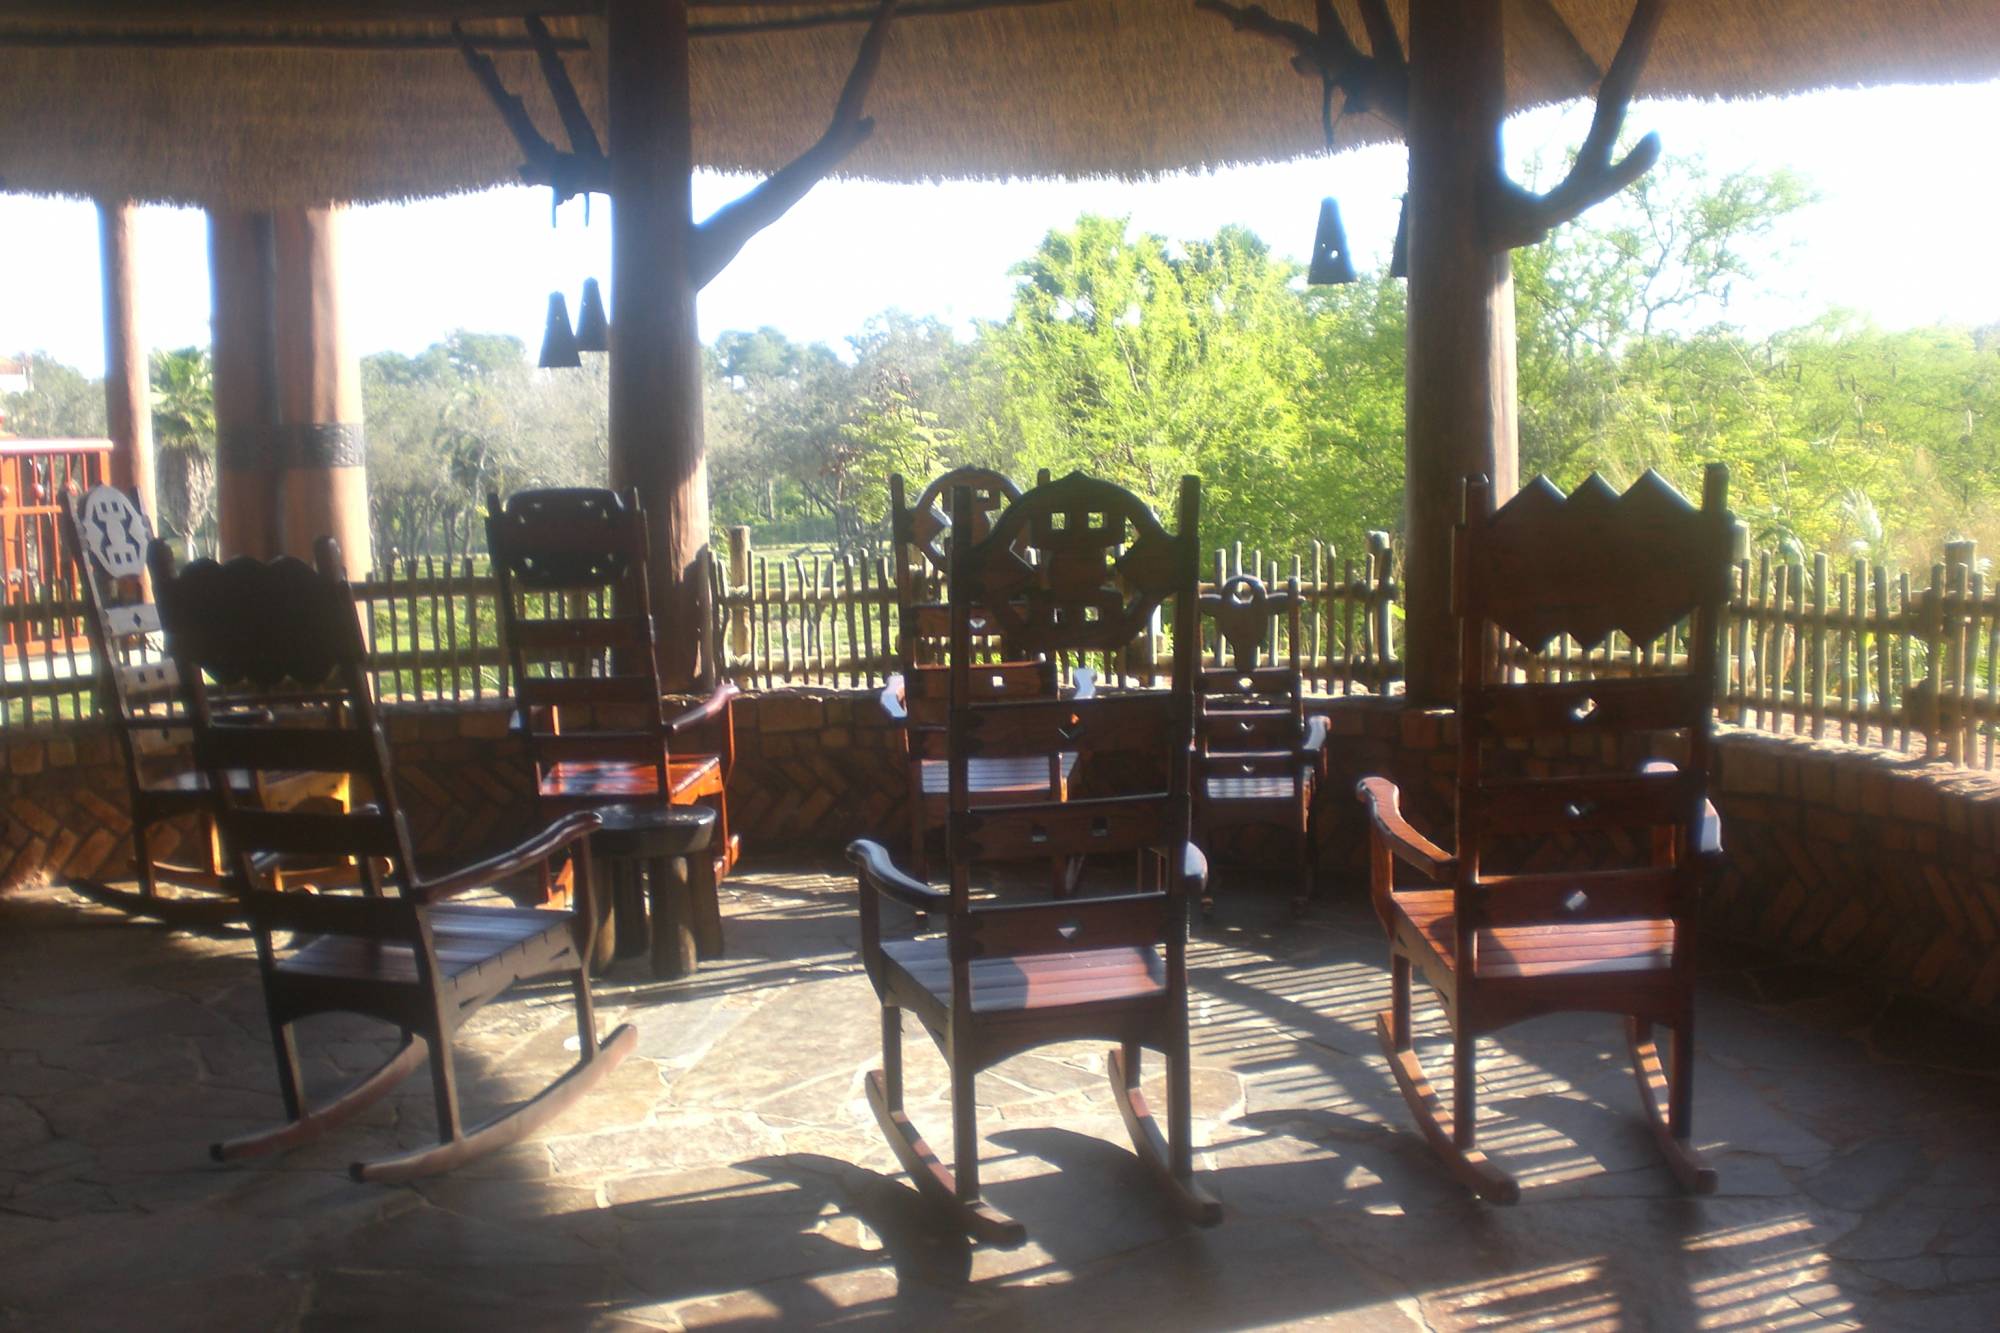 Animal Kingdom Lodge - savannah view area